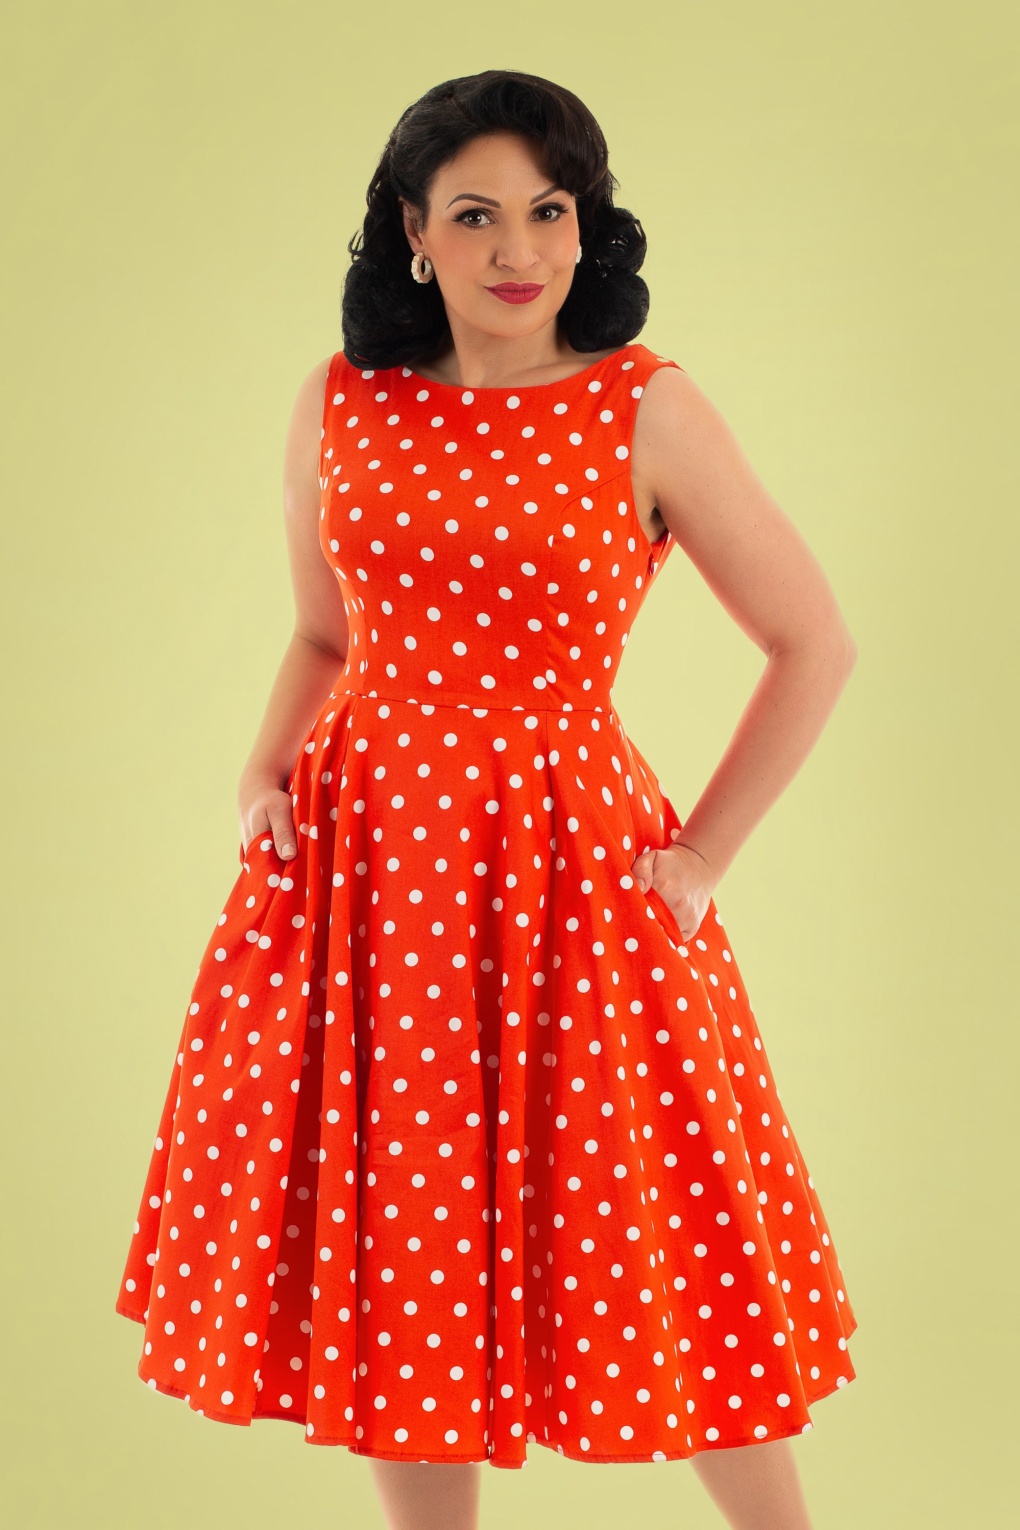 red polka dot dress 50s